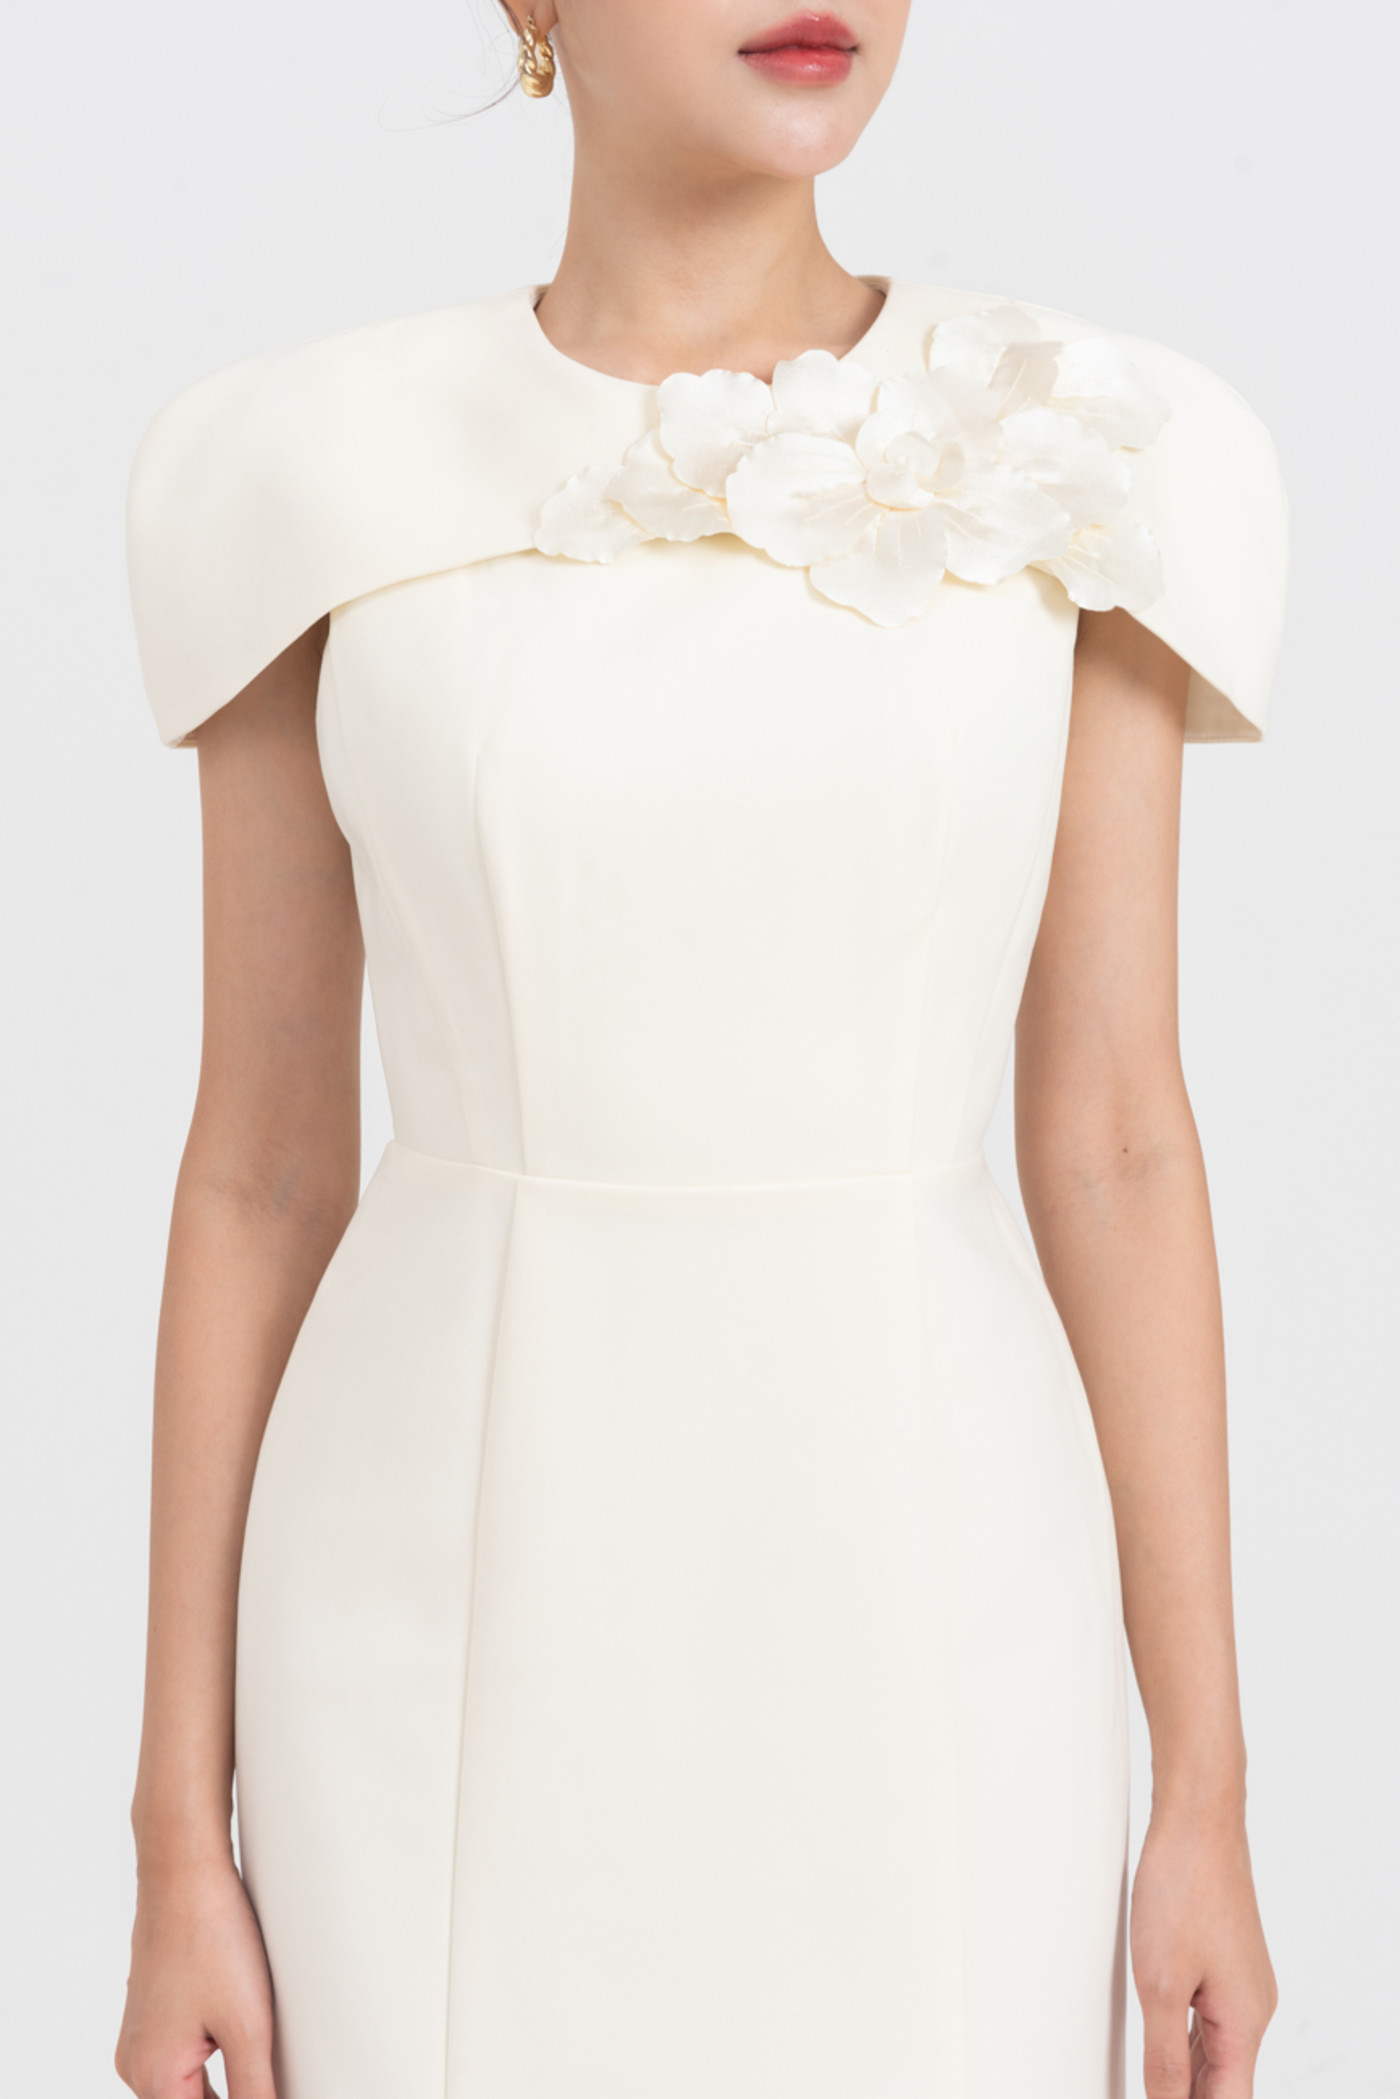 Almira Dress - Đầm đính hoa nổi tay cape 